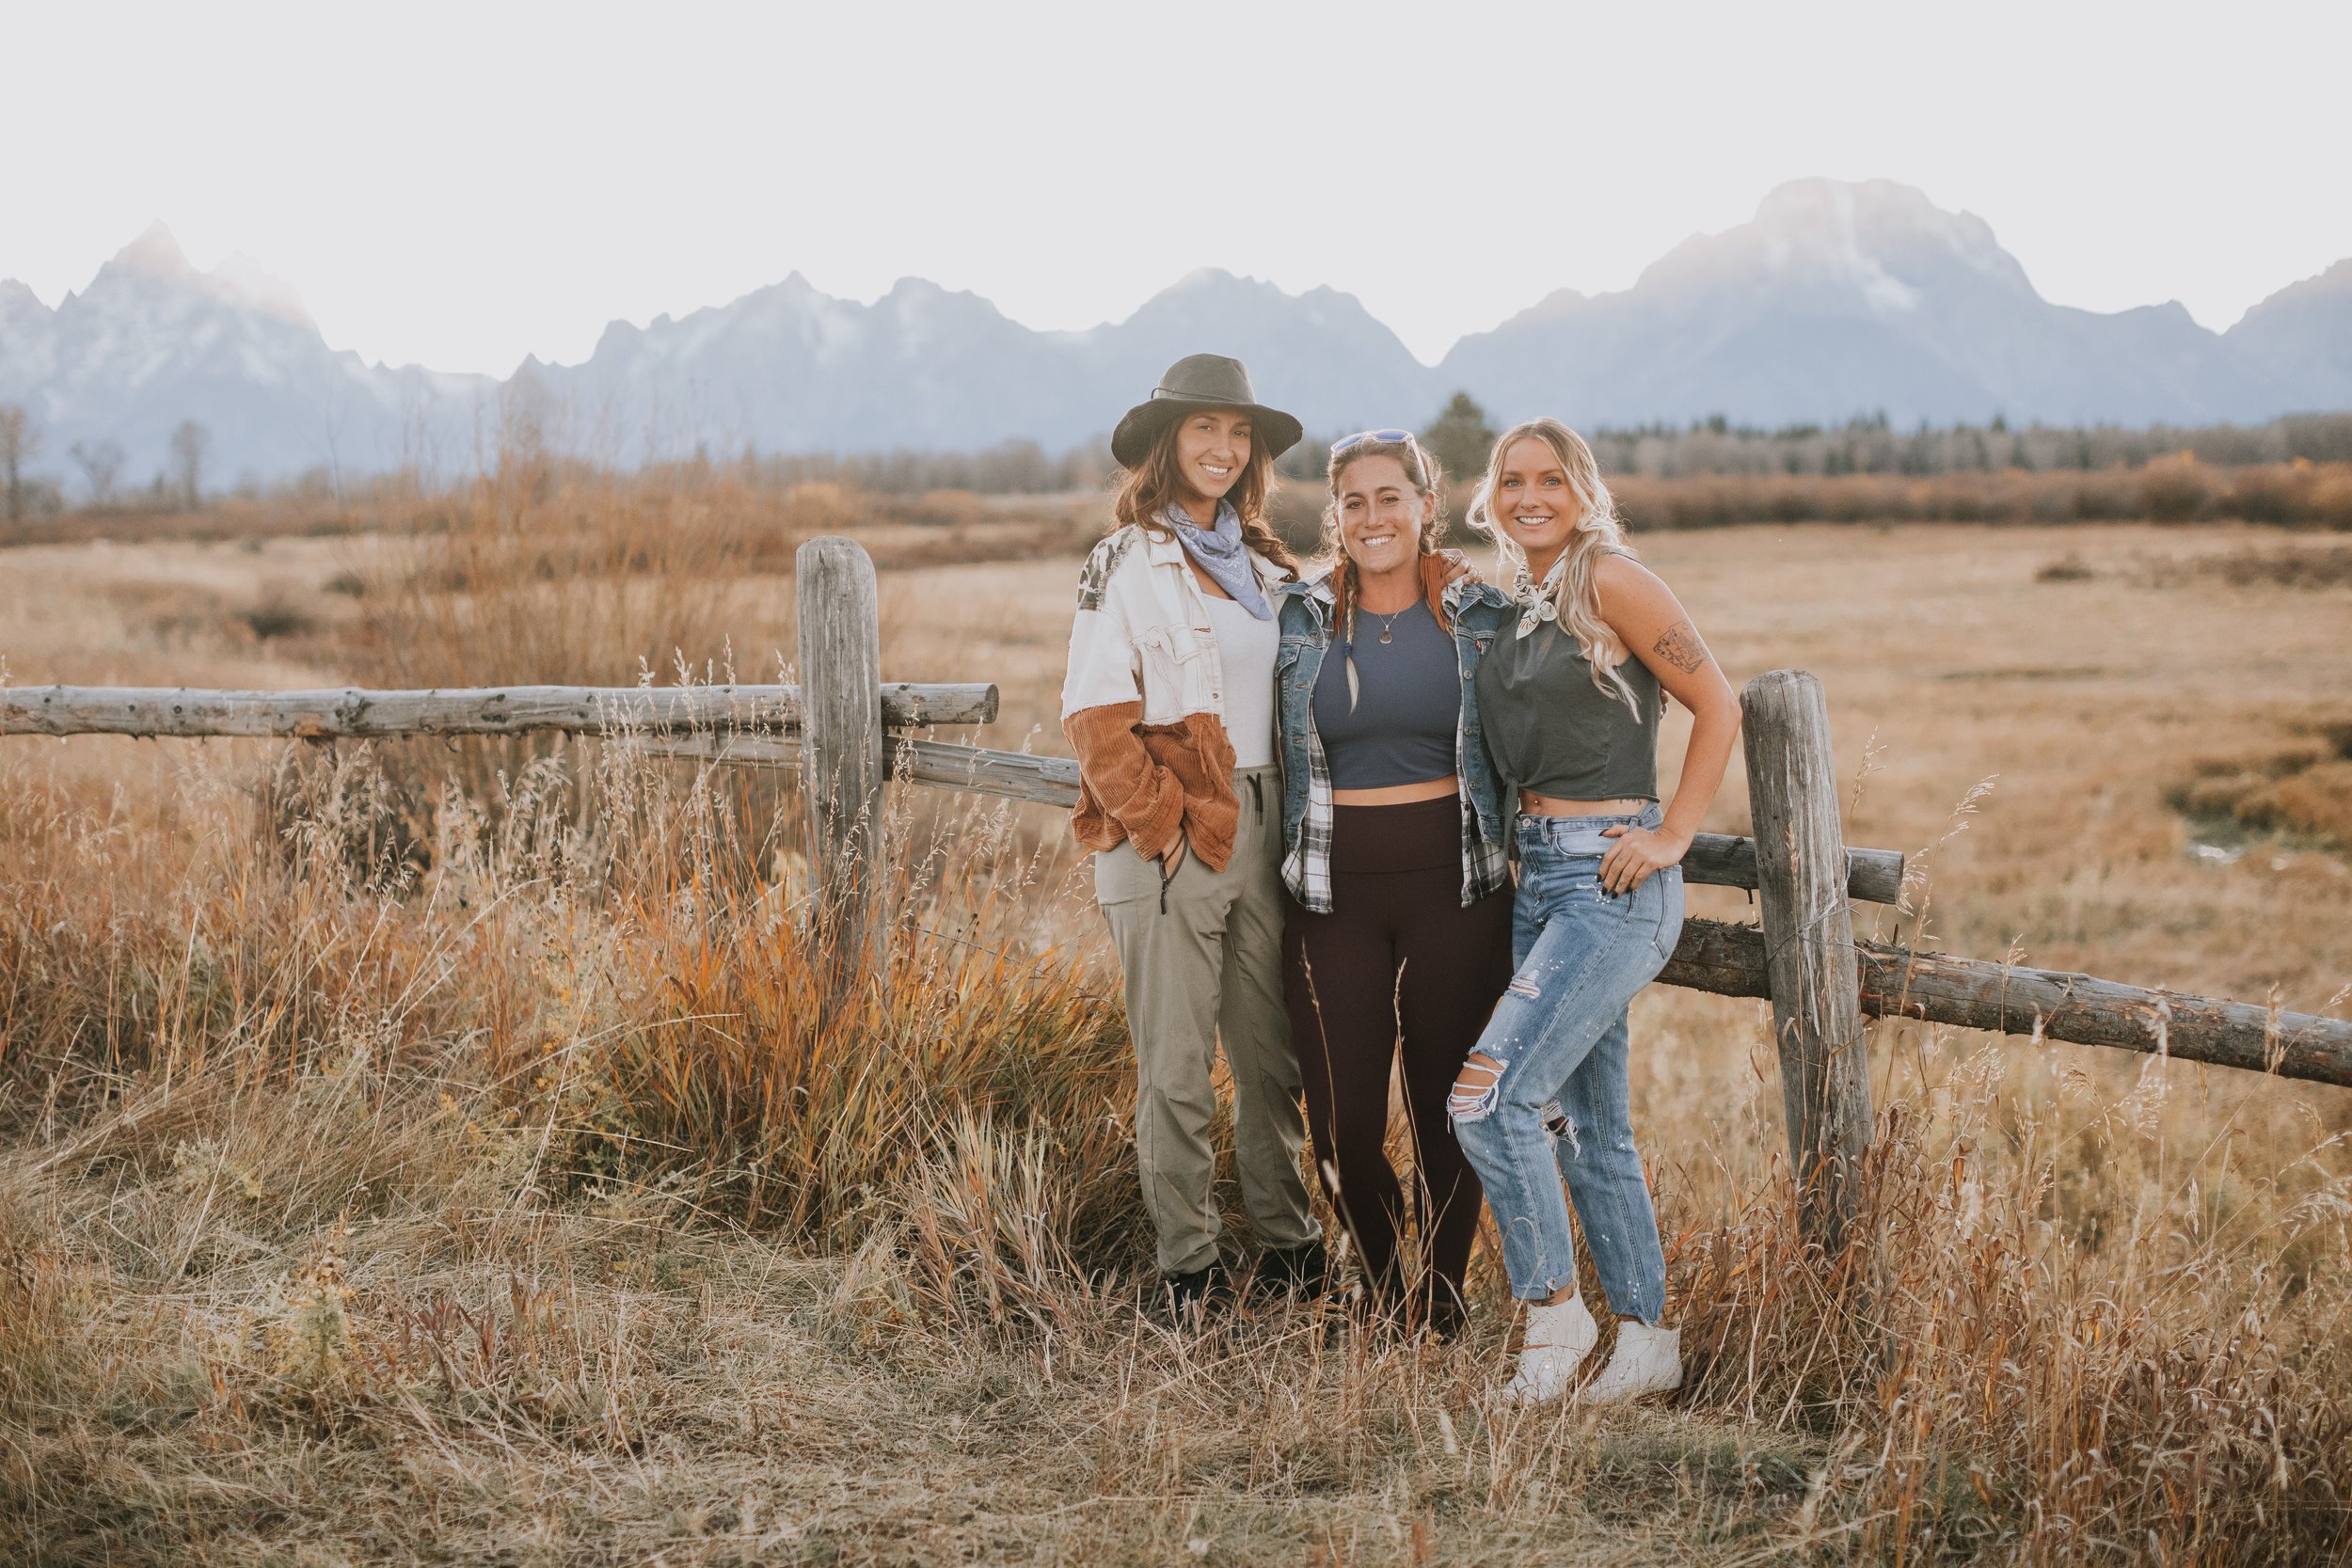 Ember and Solis Teton Yellowstone Womens Retreat Photos by Lindsey O-9801.jpg